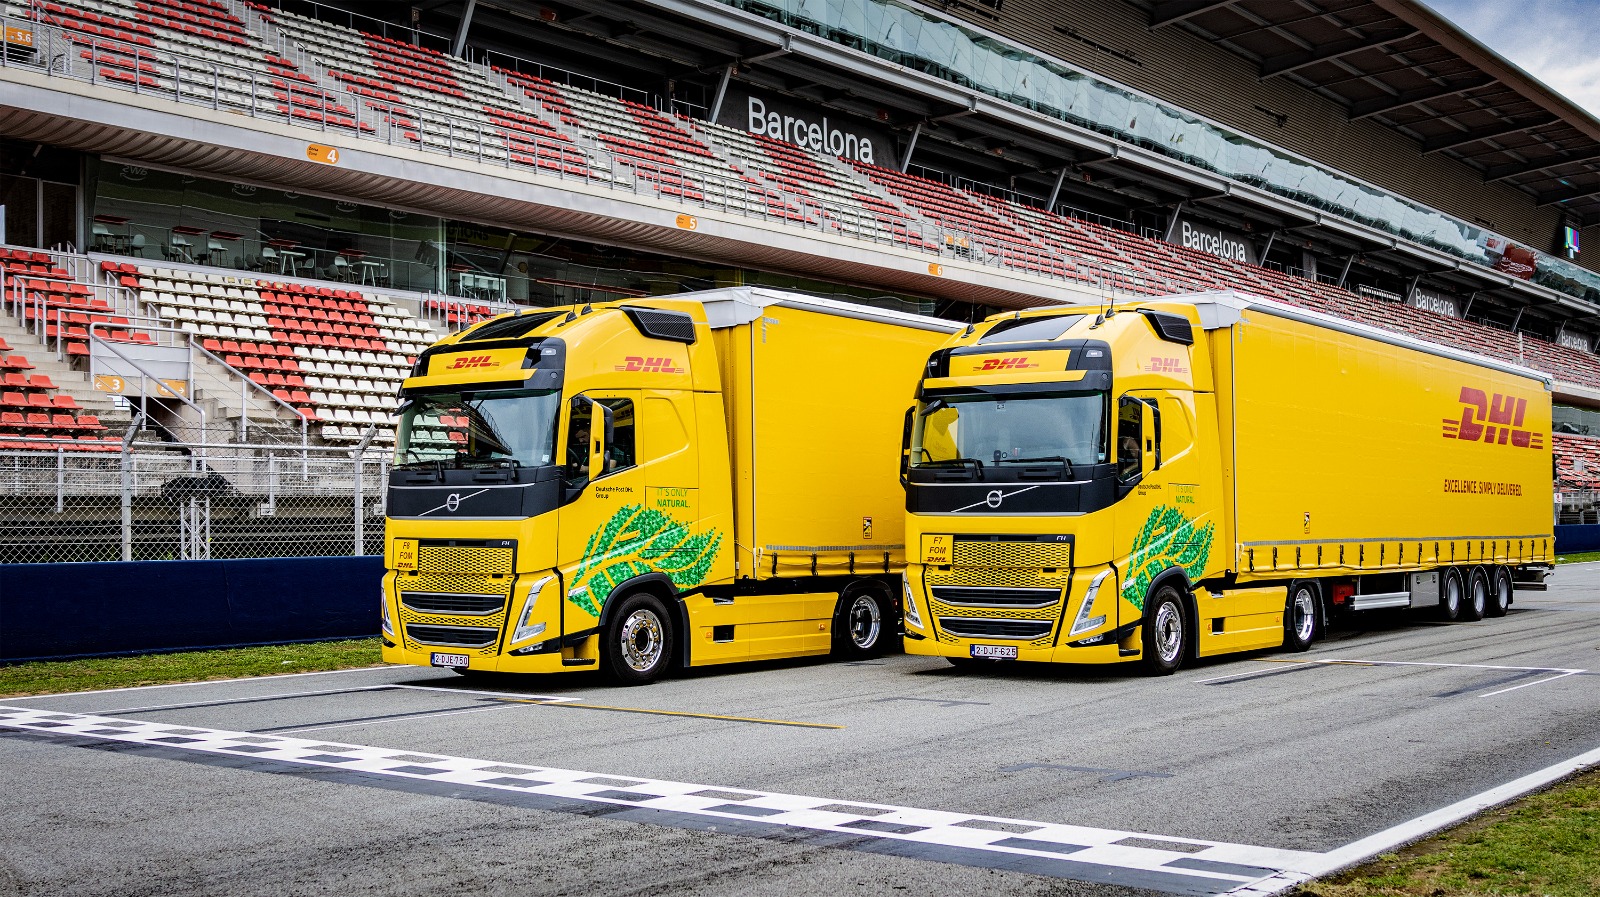 Presenta DHL primera flota de camiones impulsada por biocombustible